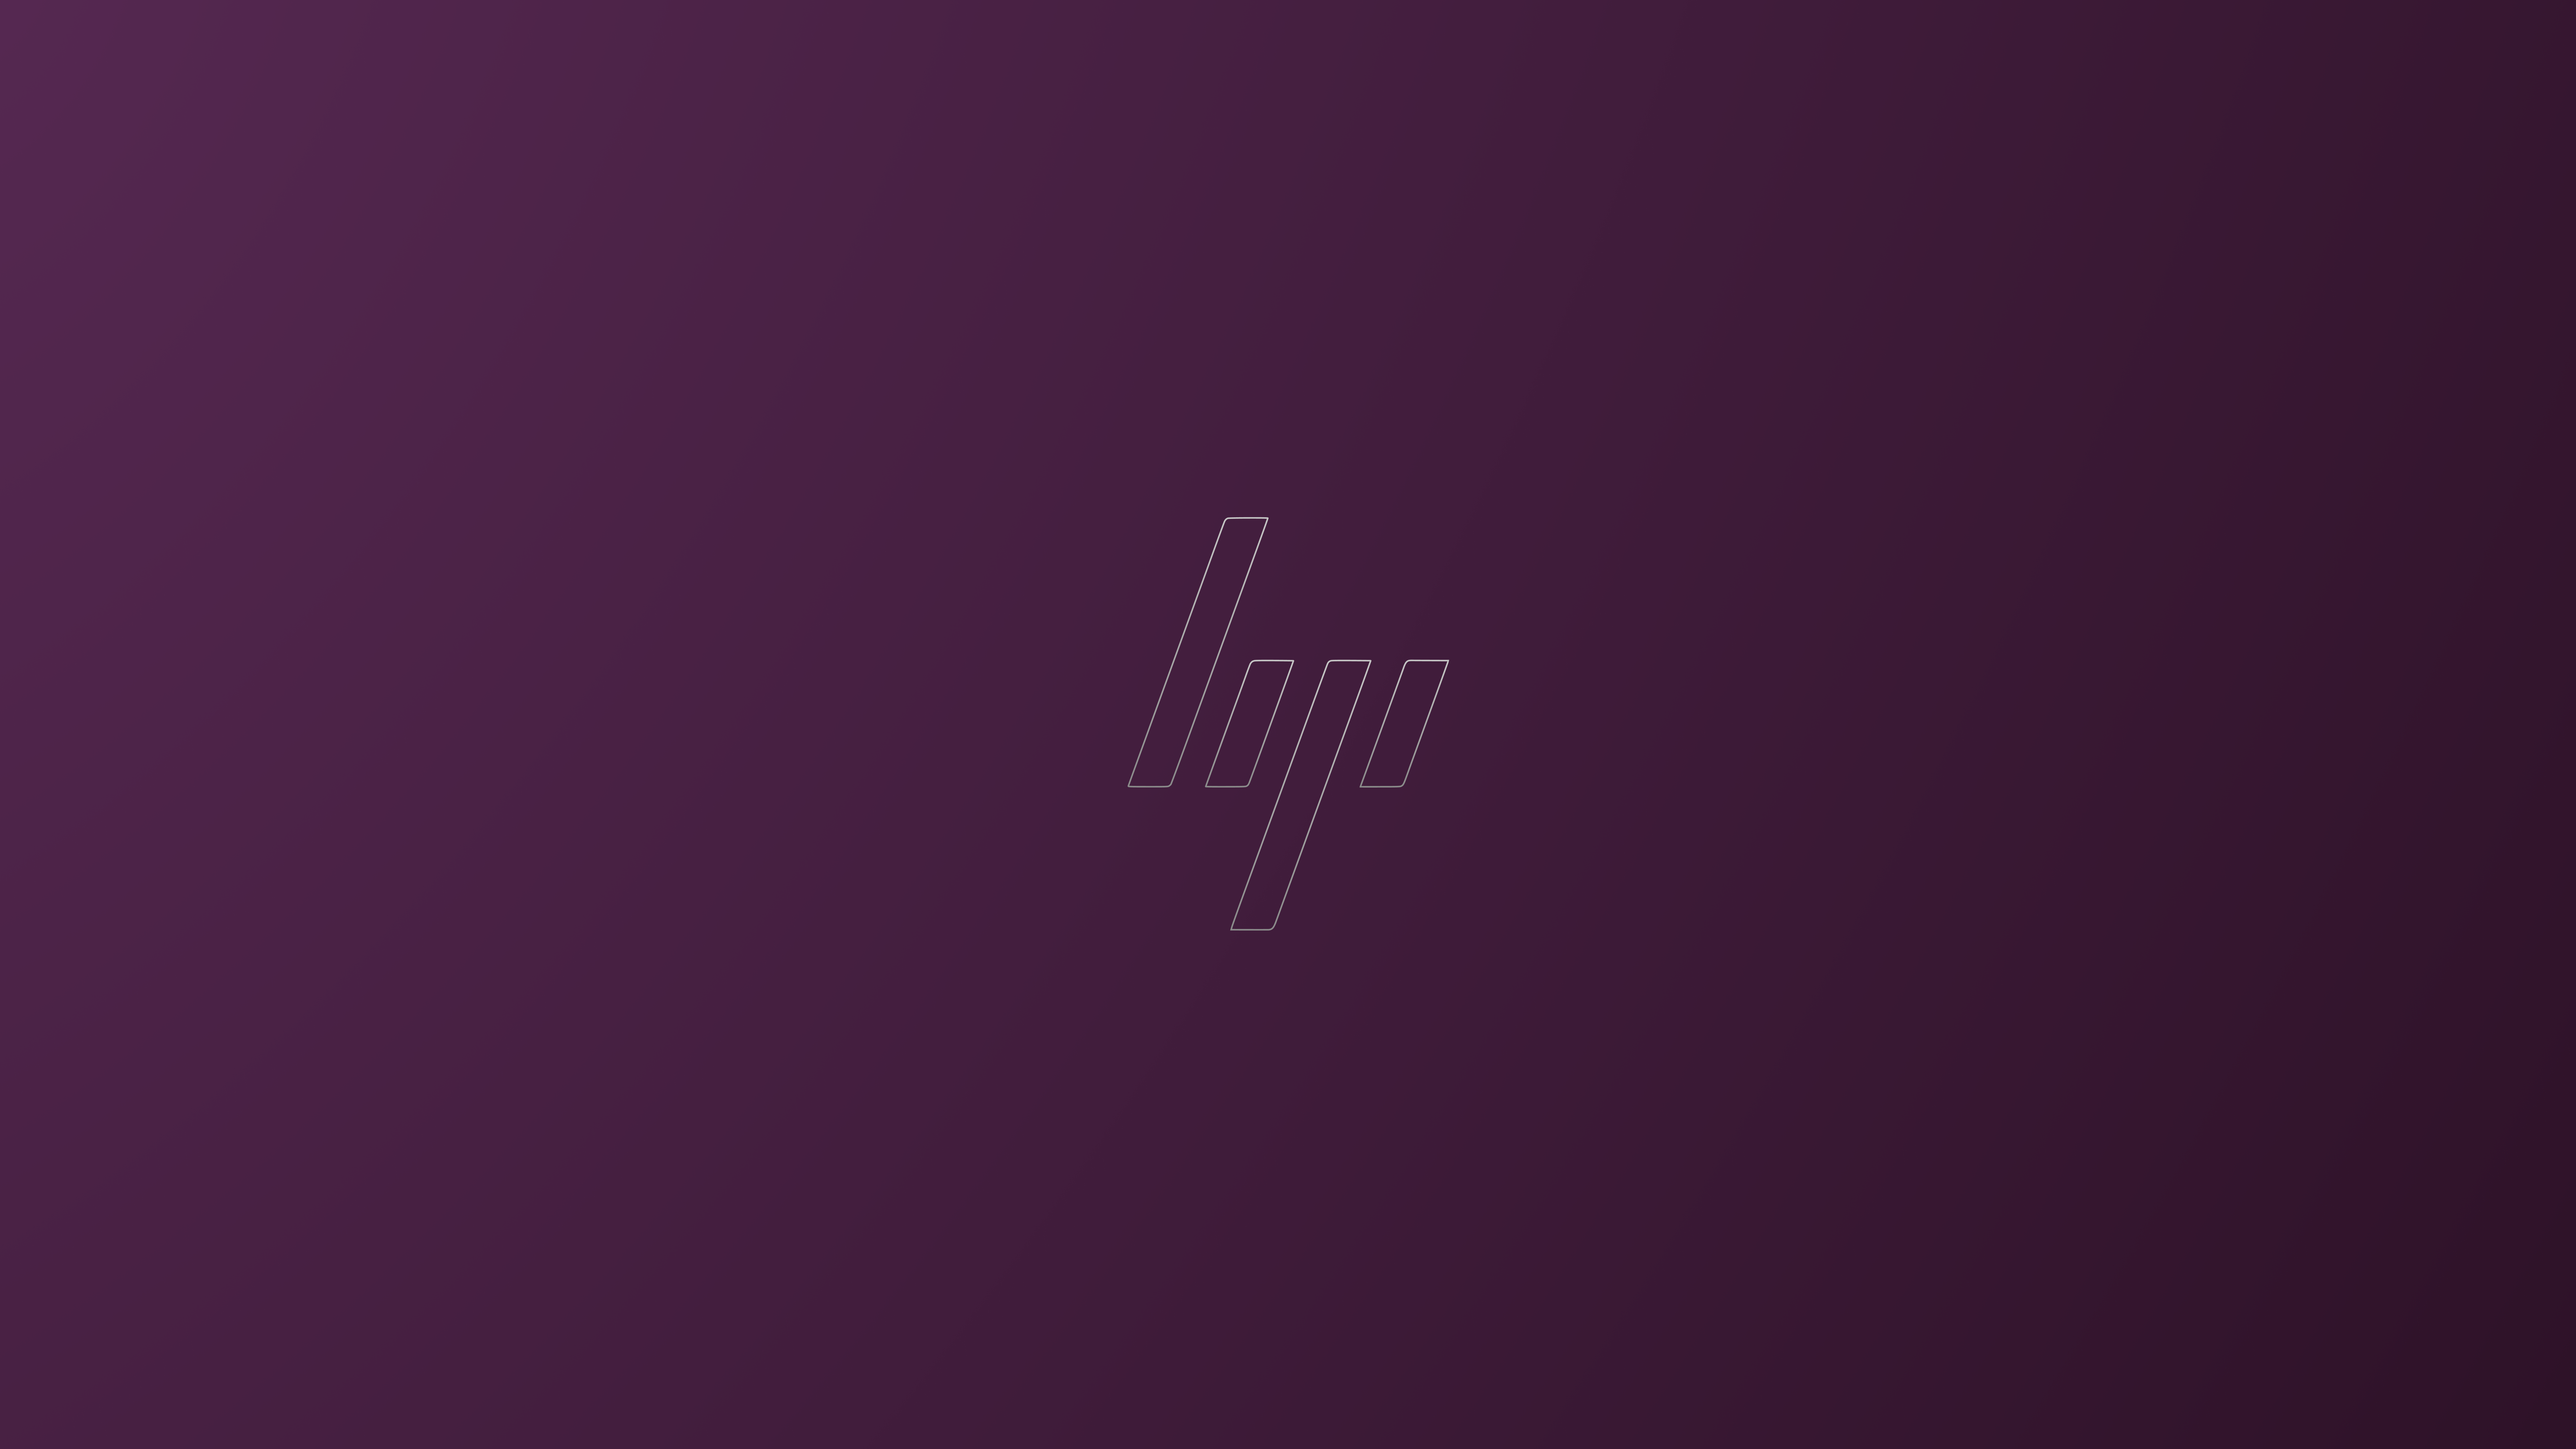 General 7680x4320 brand Hewlett Packard minimalism digital art simple background logo purple purple background